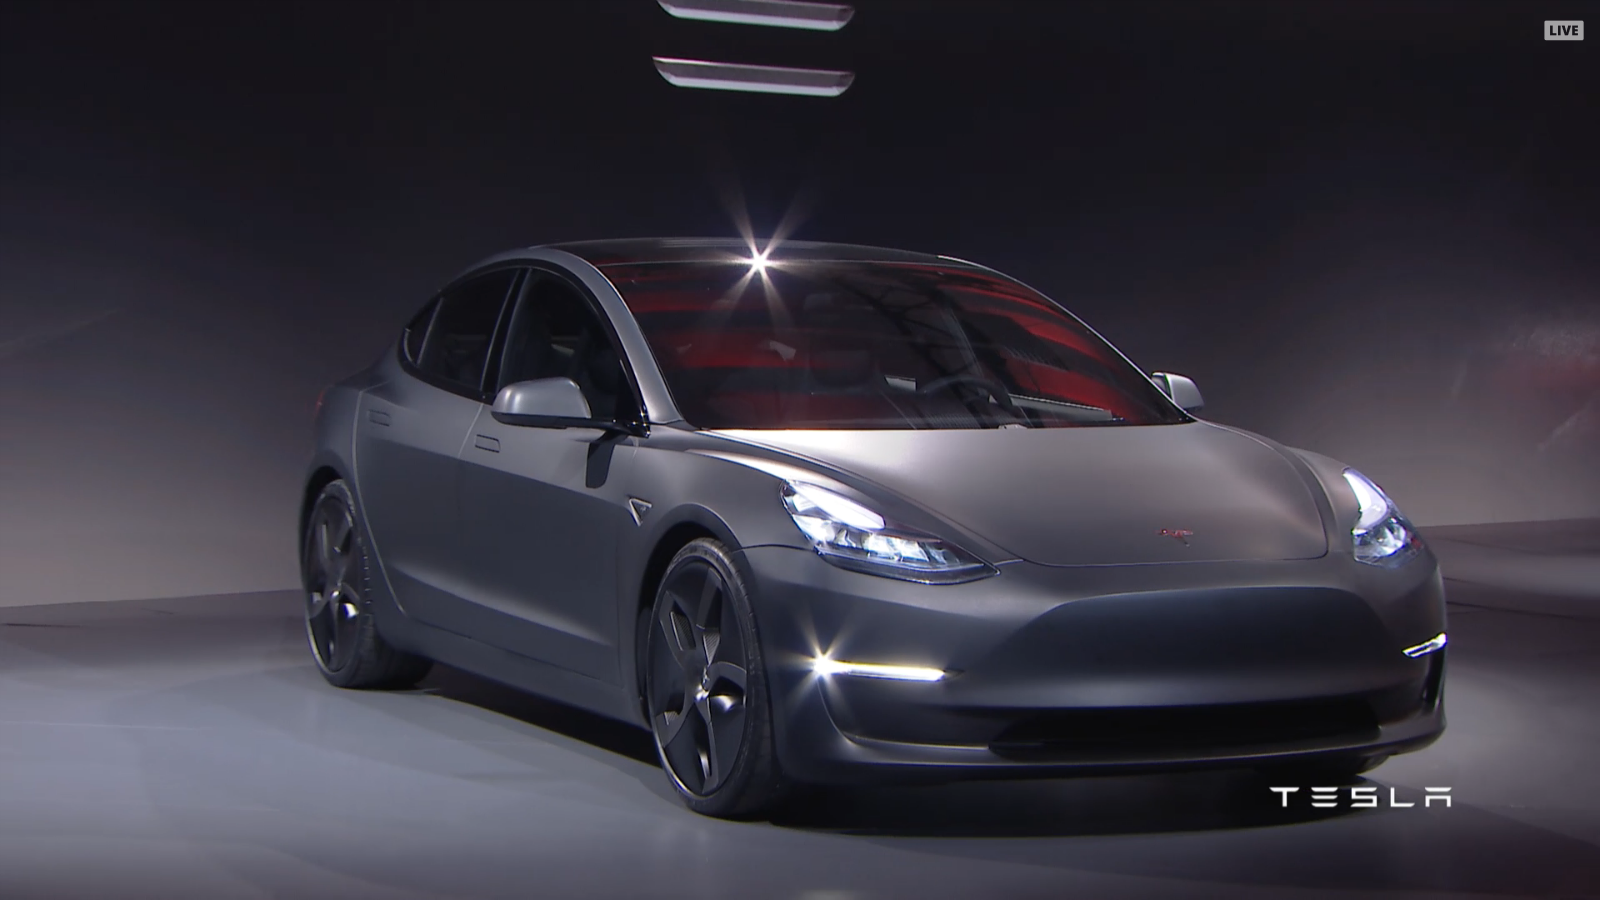 Fabulous Tesla Model Model S and X Wallpaper. Tesla model, Car model, Tesla